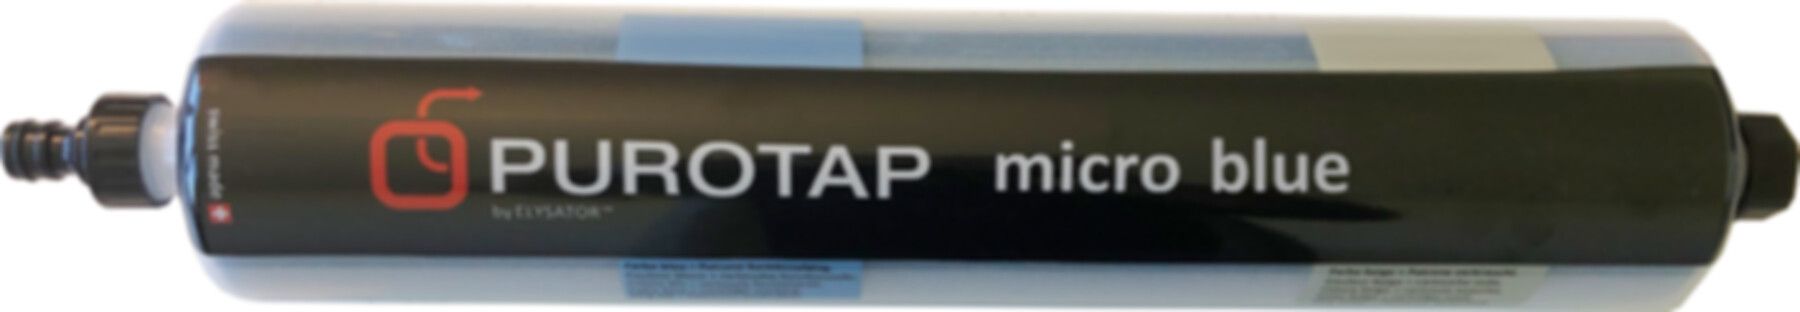 Purotap Micro Ersatz-Einwegpatrone 101197 - Elysator Heizungswasseraufbereitung